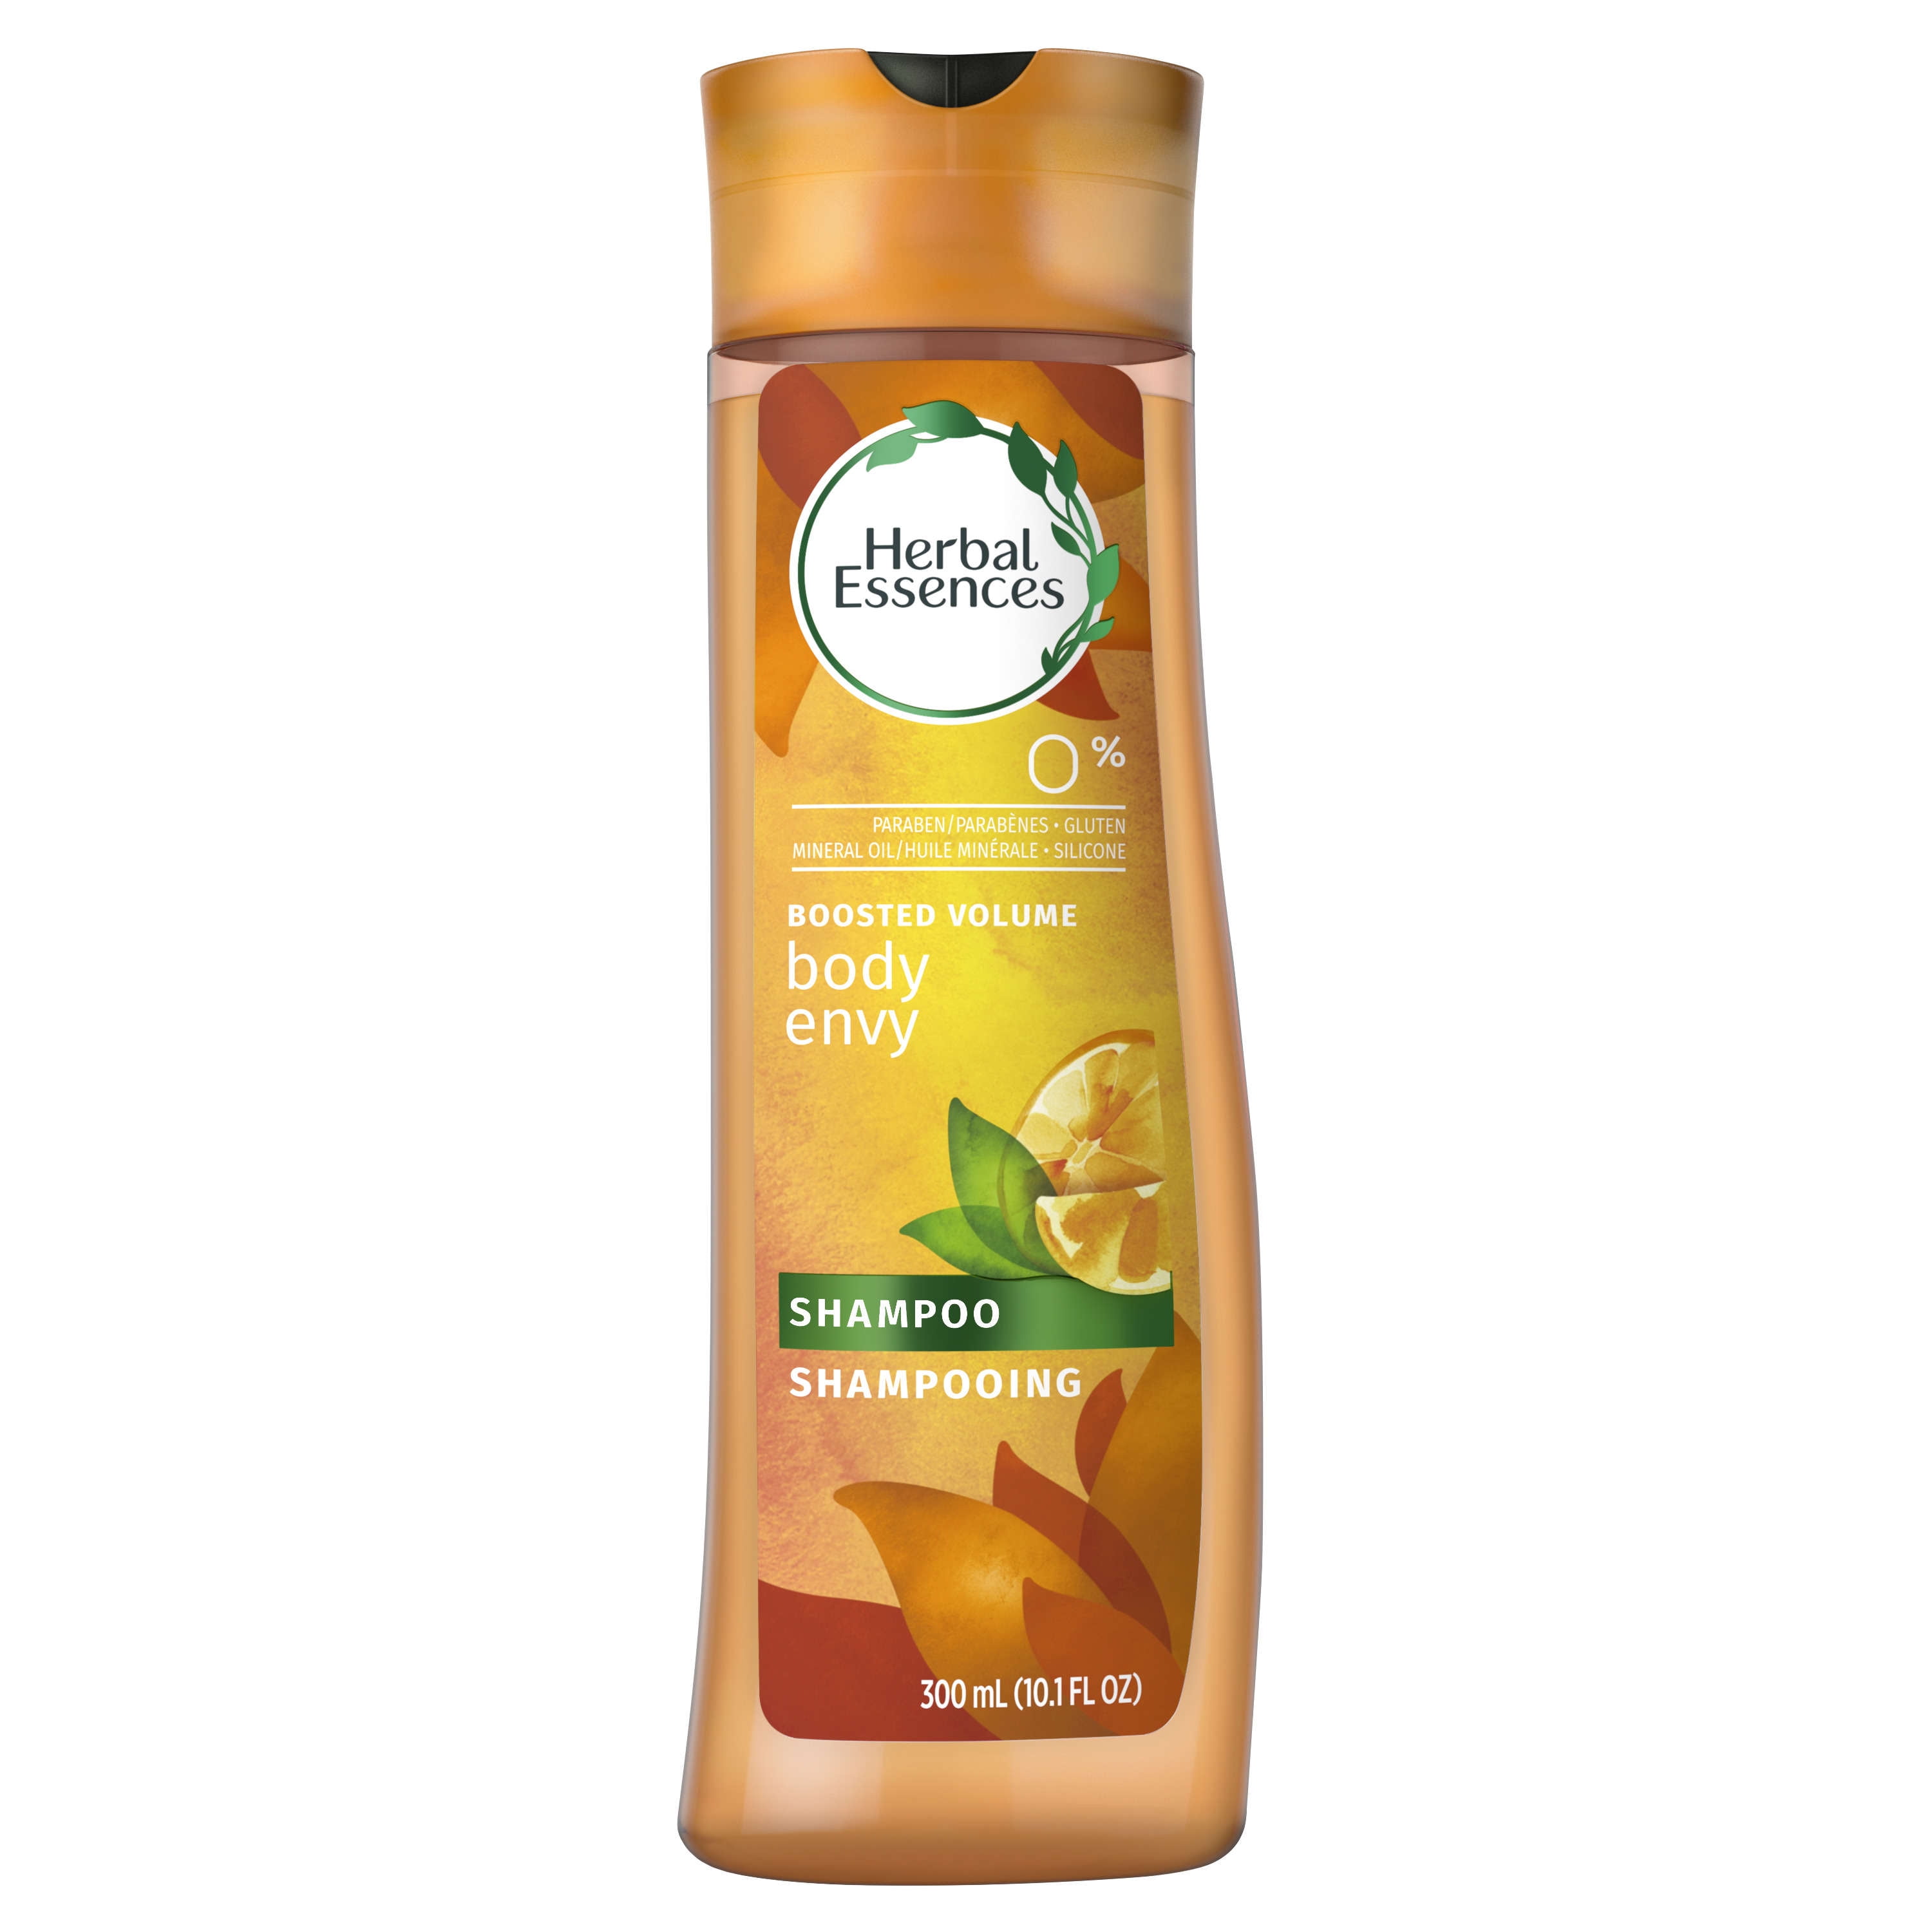 Herbal Essences Body Envy Volumizing Shampoo with Citrus Essences, 10.1 fl oz